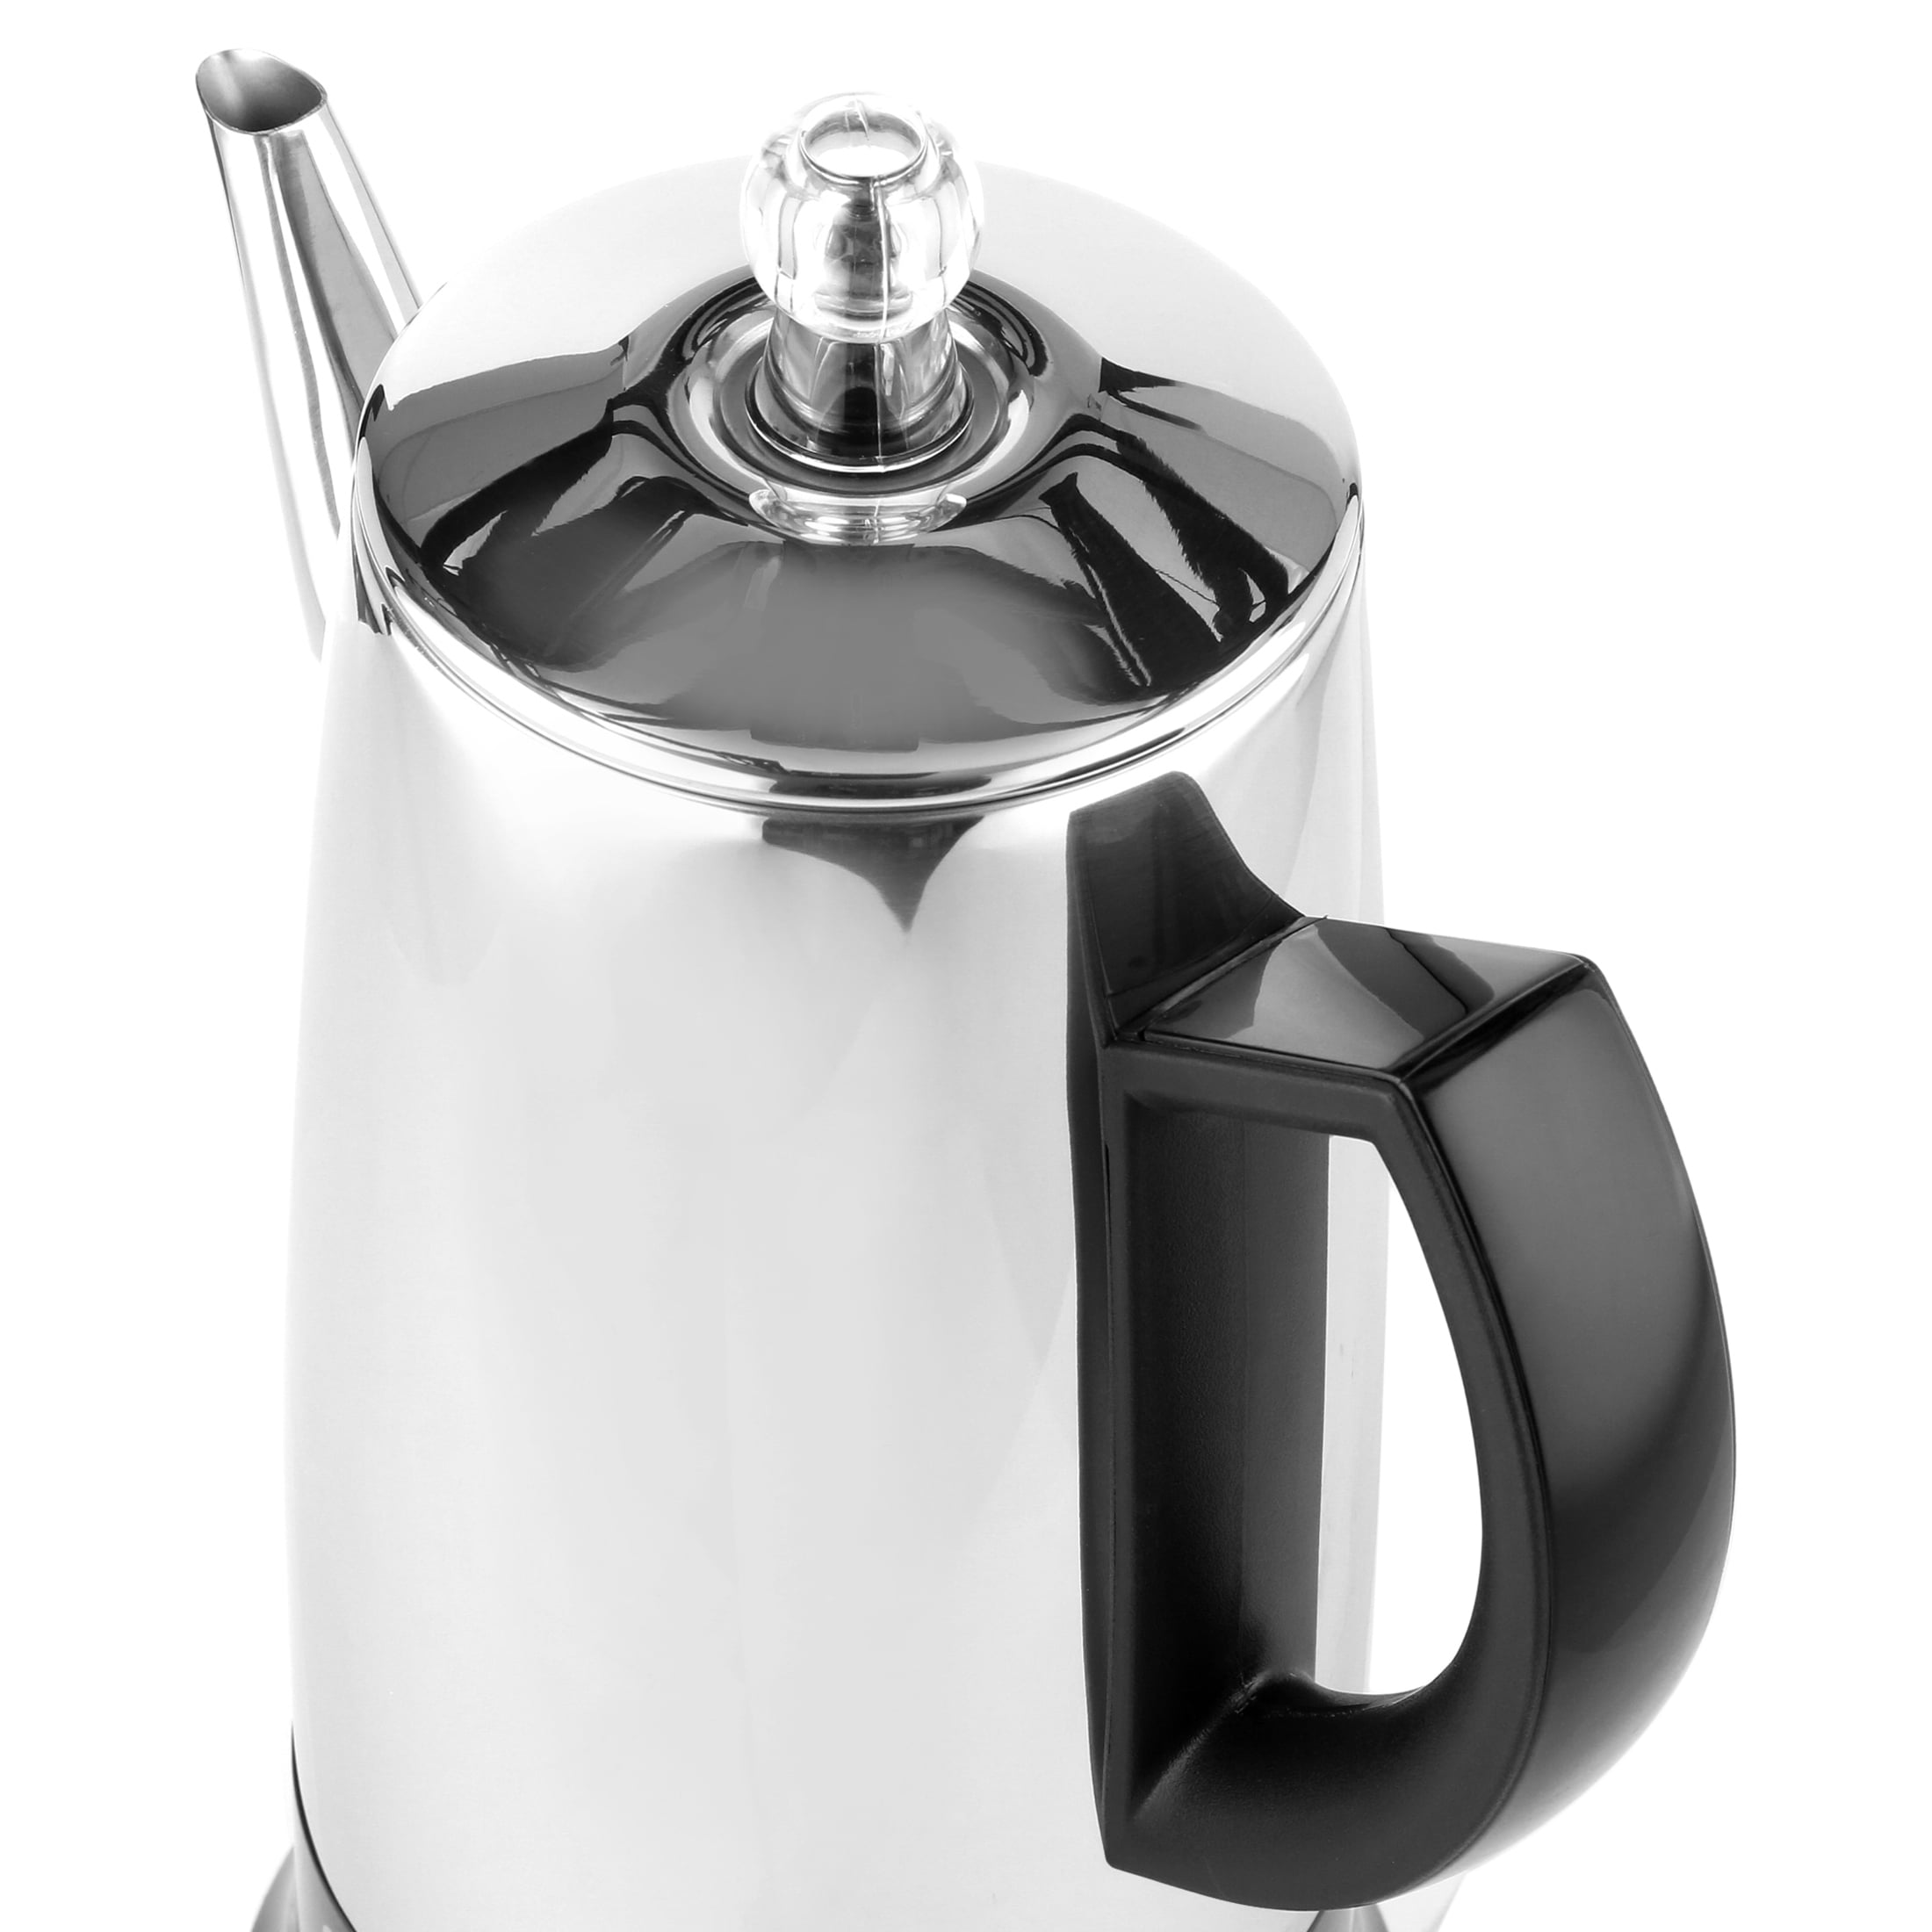 SENSEMAKE 12 Cup Electric Percolator Coffee Maker, Stainless Steel